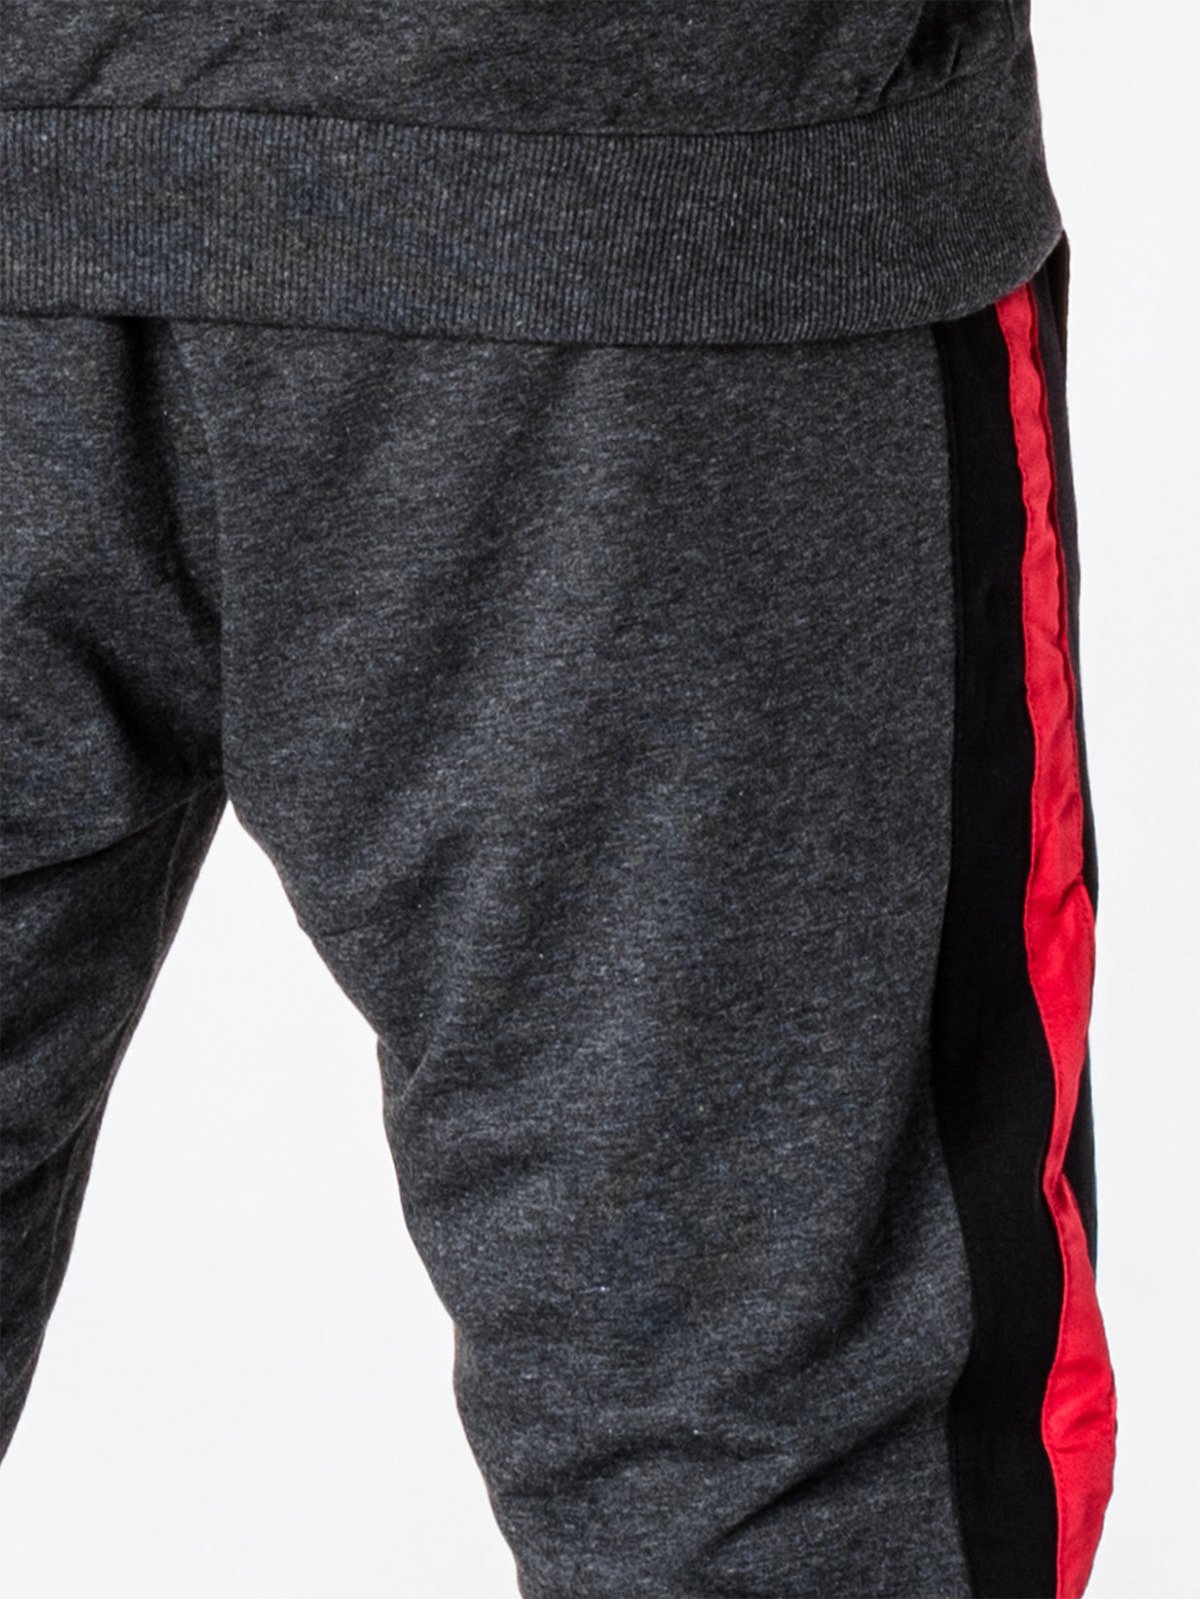 Men's set hoodie + pants - grey Z26  MODONE wholesale - Clothing For Men